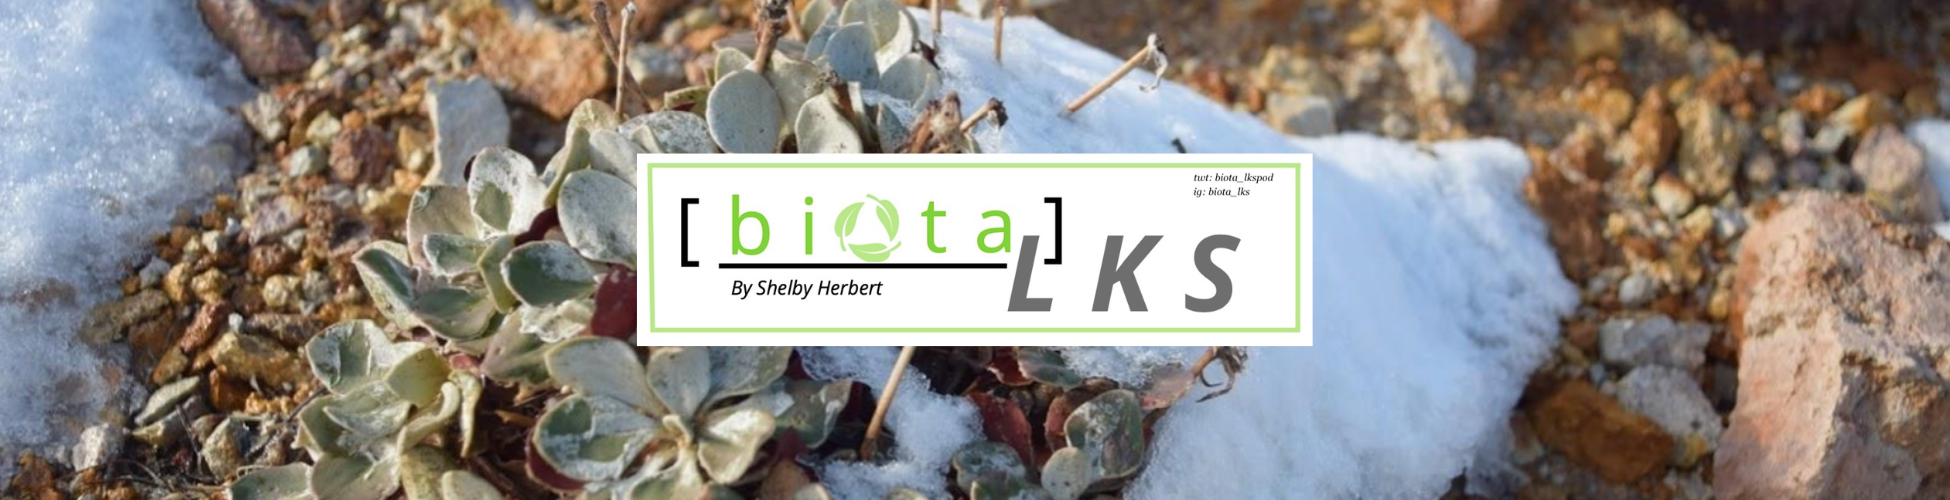 biotalks logo overlayed on buckwheat image